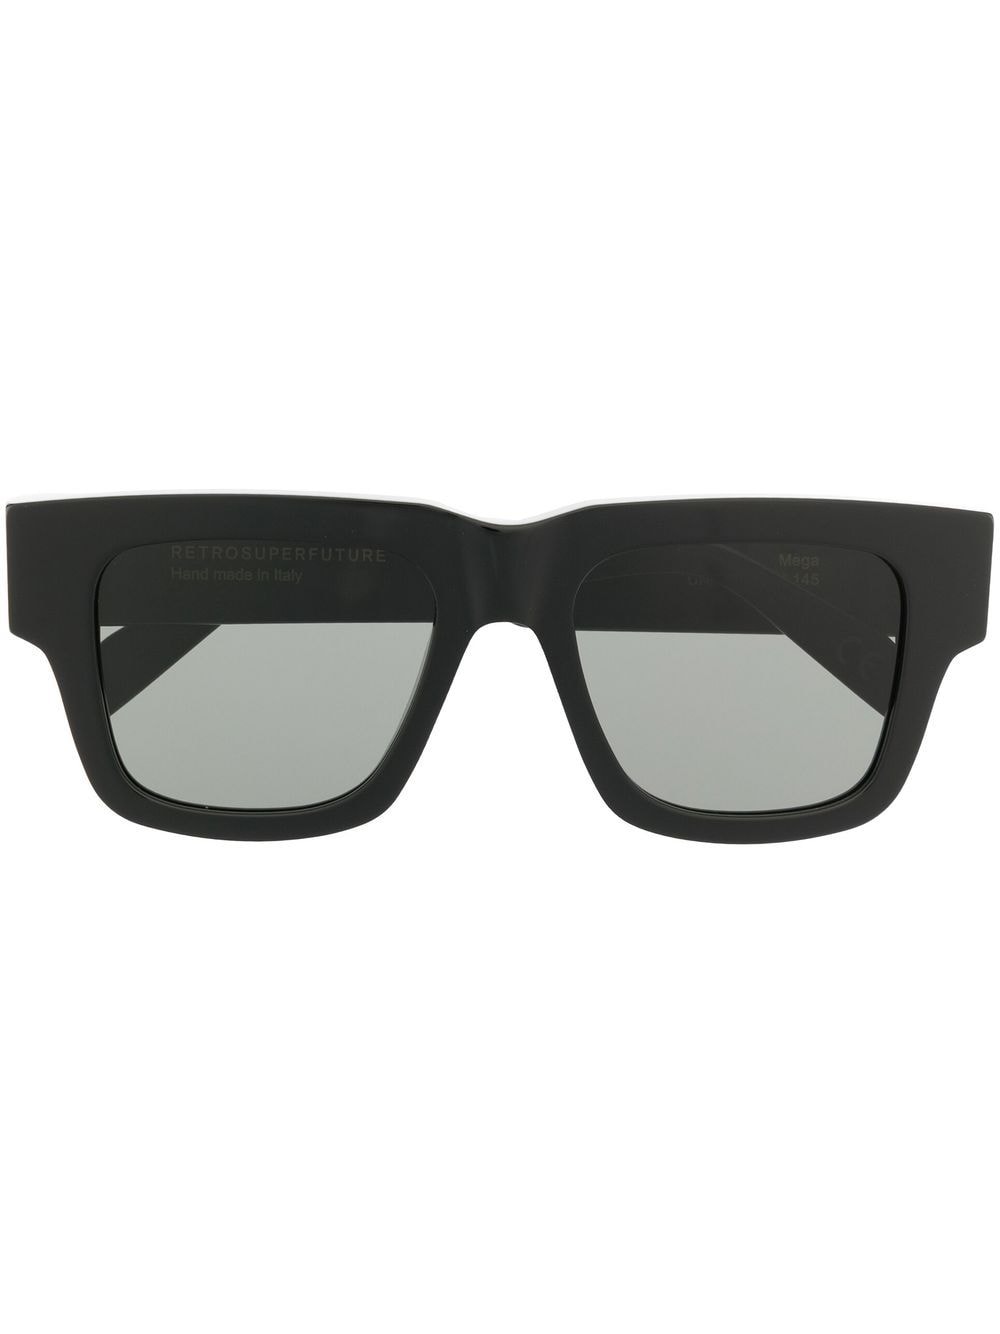 Retrosuperfuture square frame sunglasses - Black von Retrosuperfuture